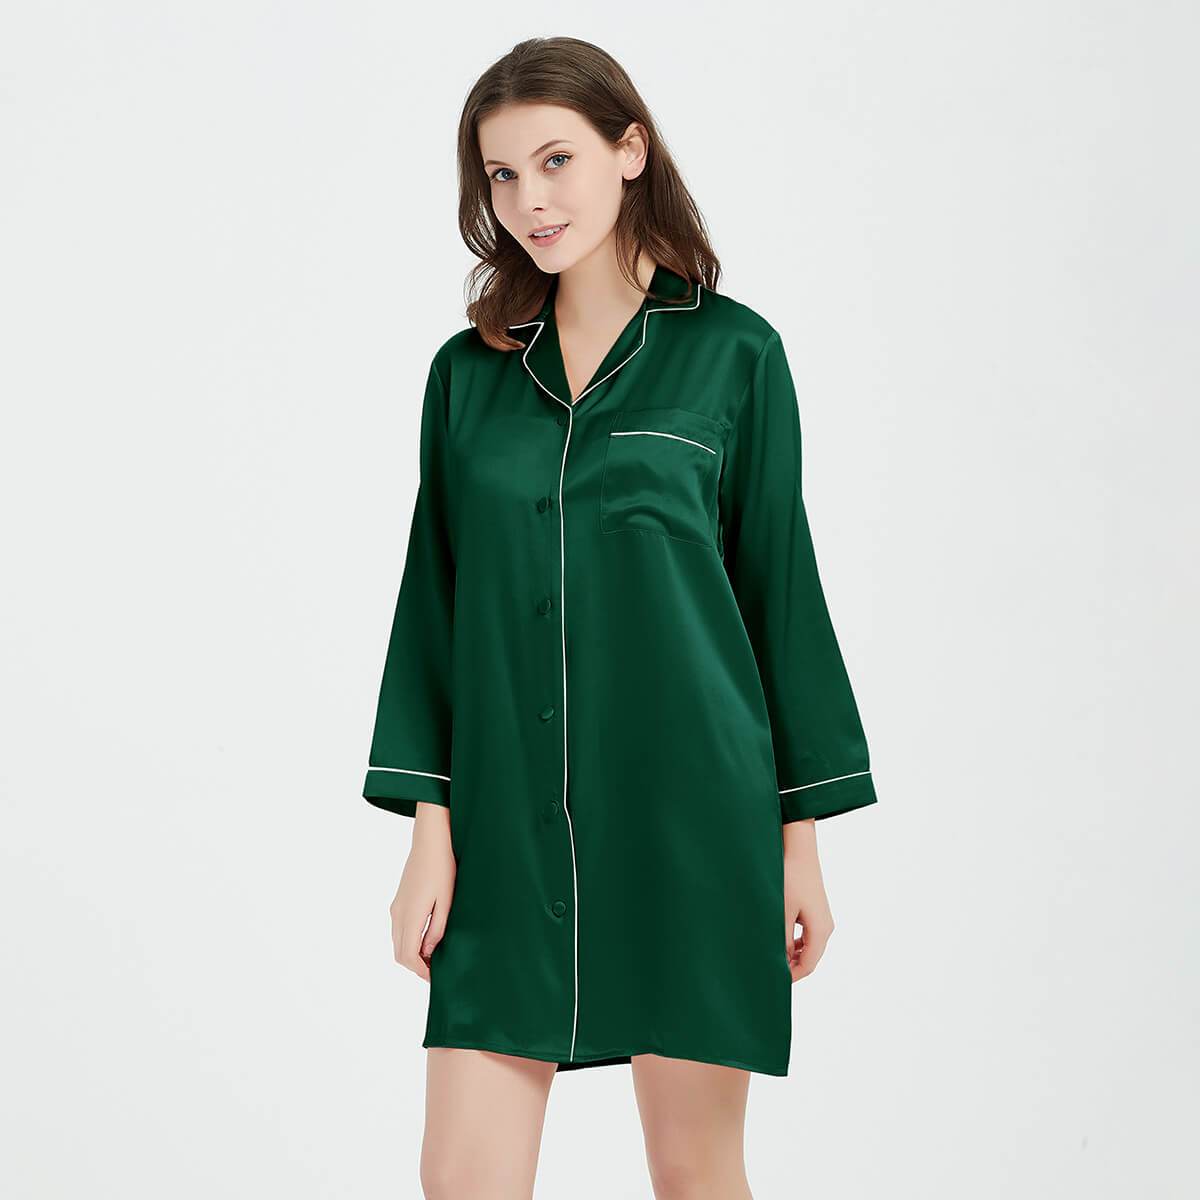 Women's Satin Silk Nightwear Button Down Sleepshirt Half Sleeve